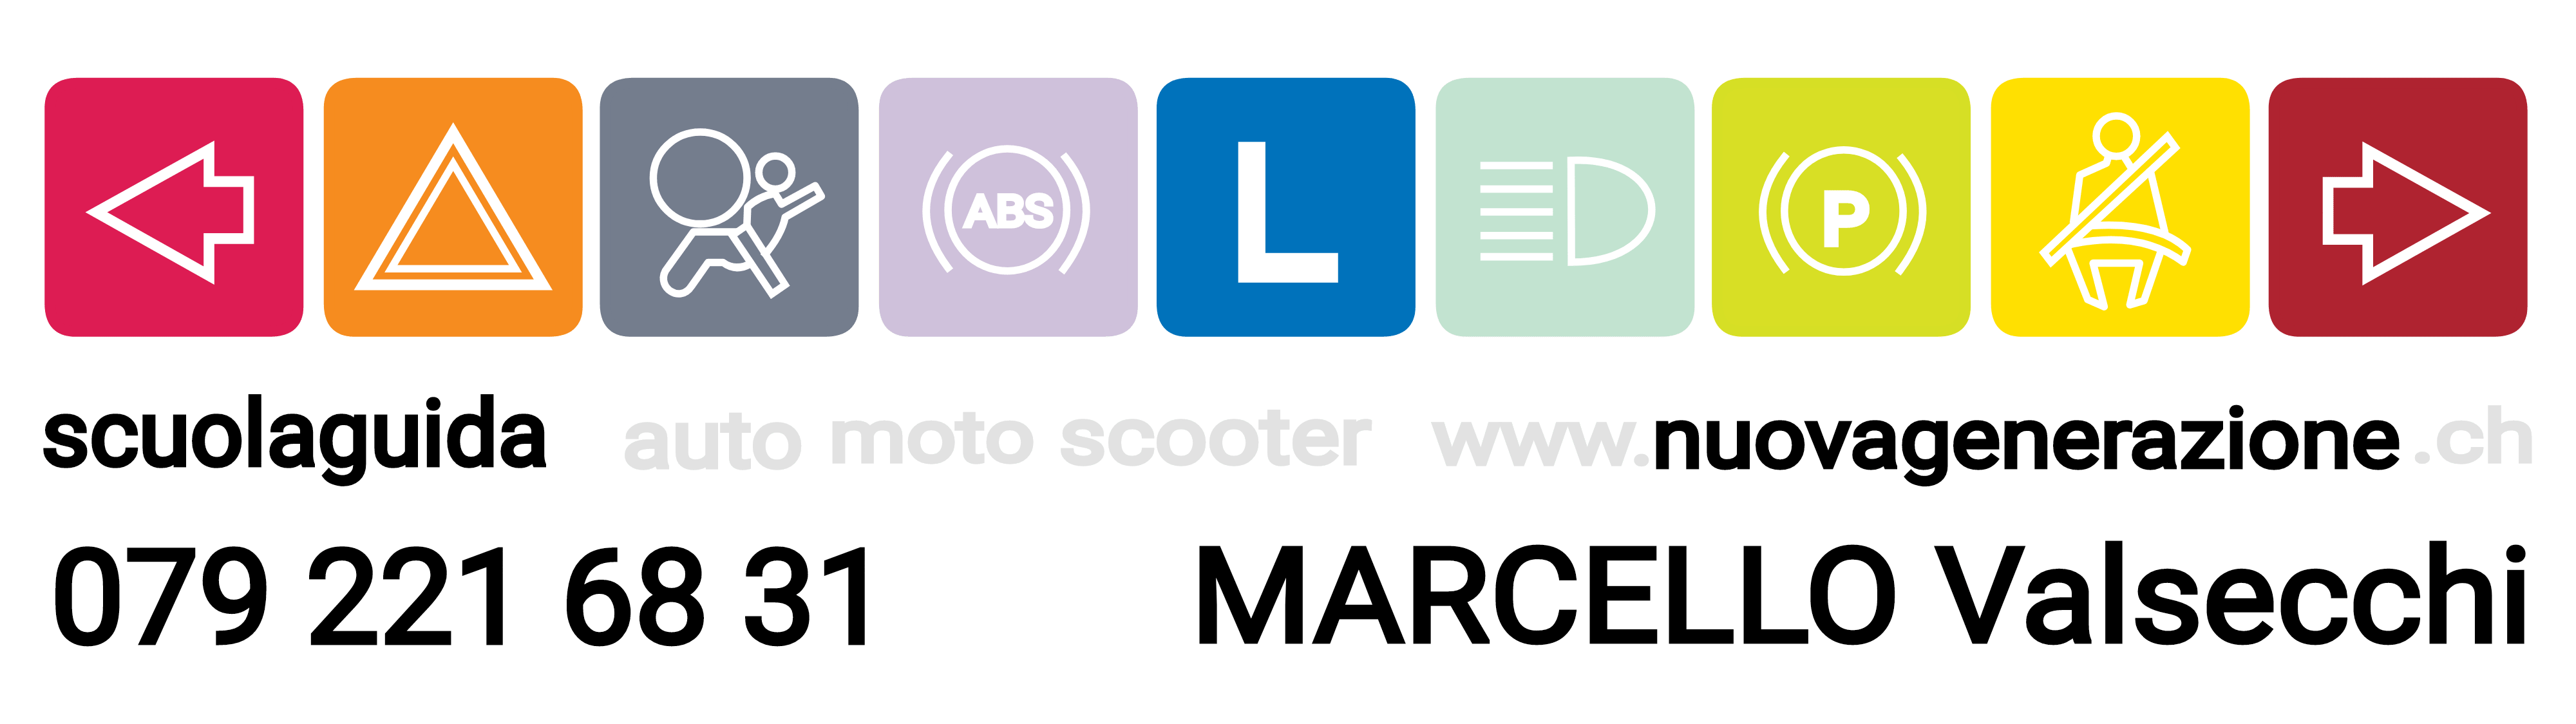 marcello slideshow img2